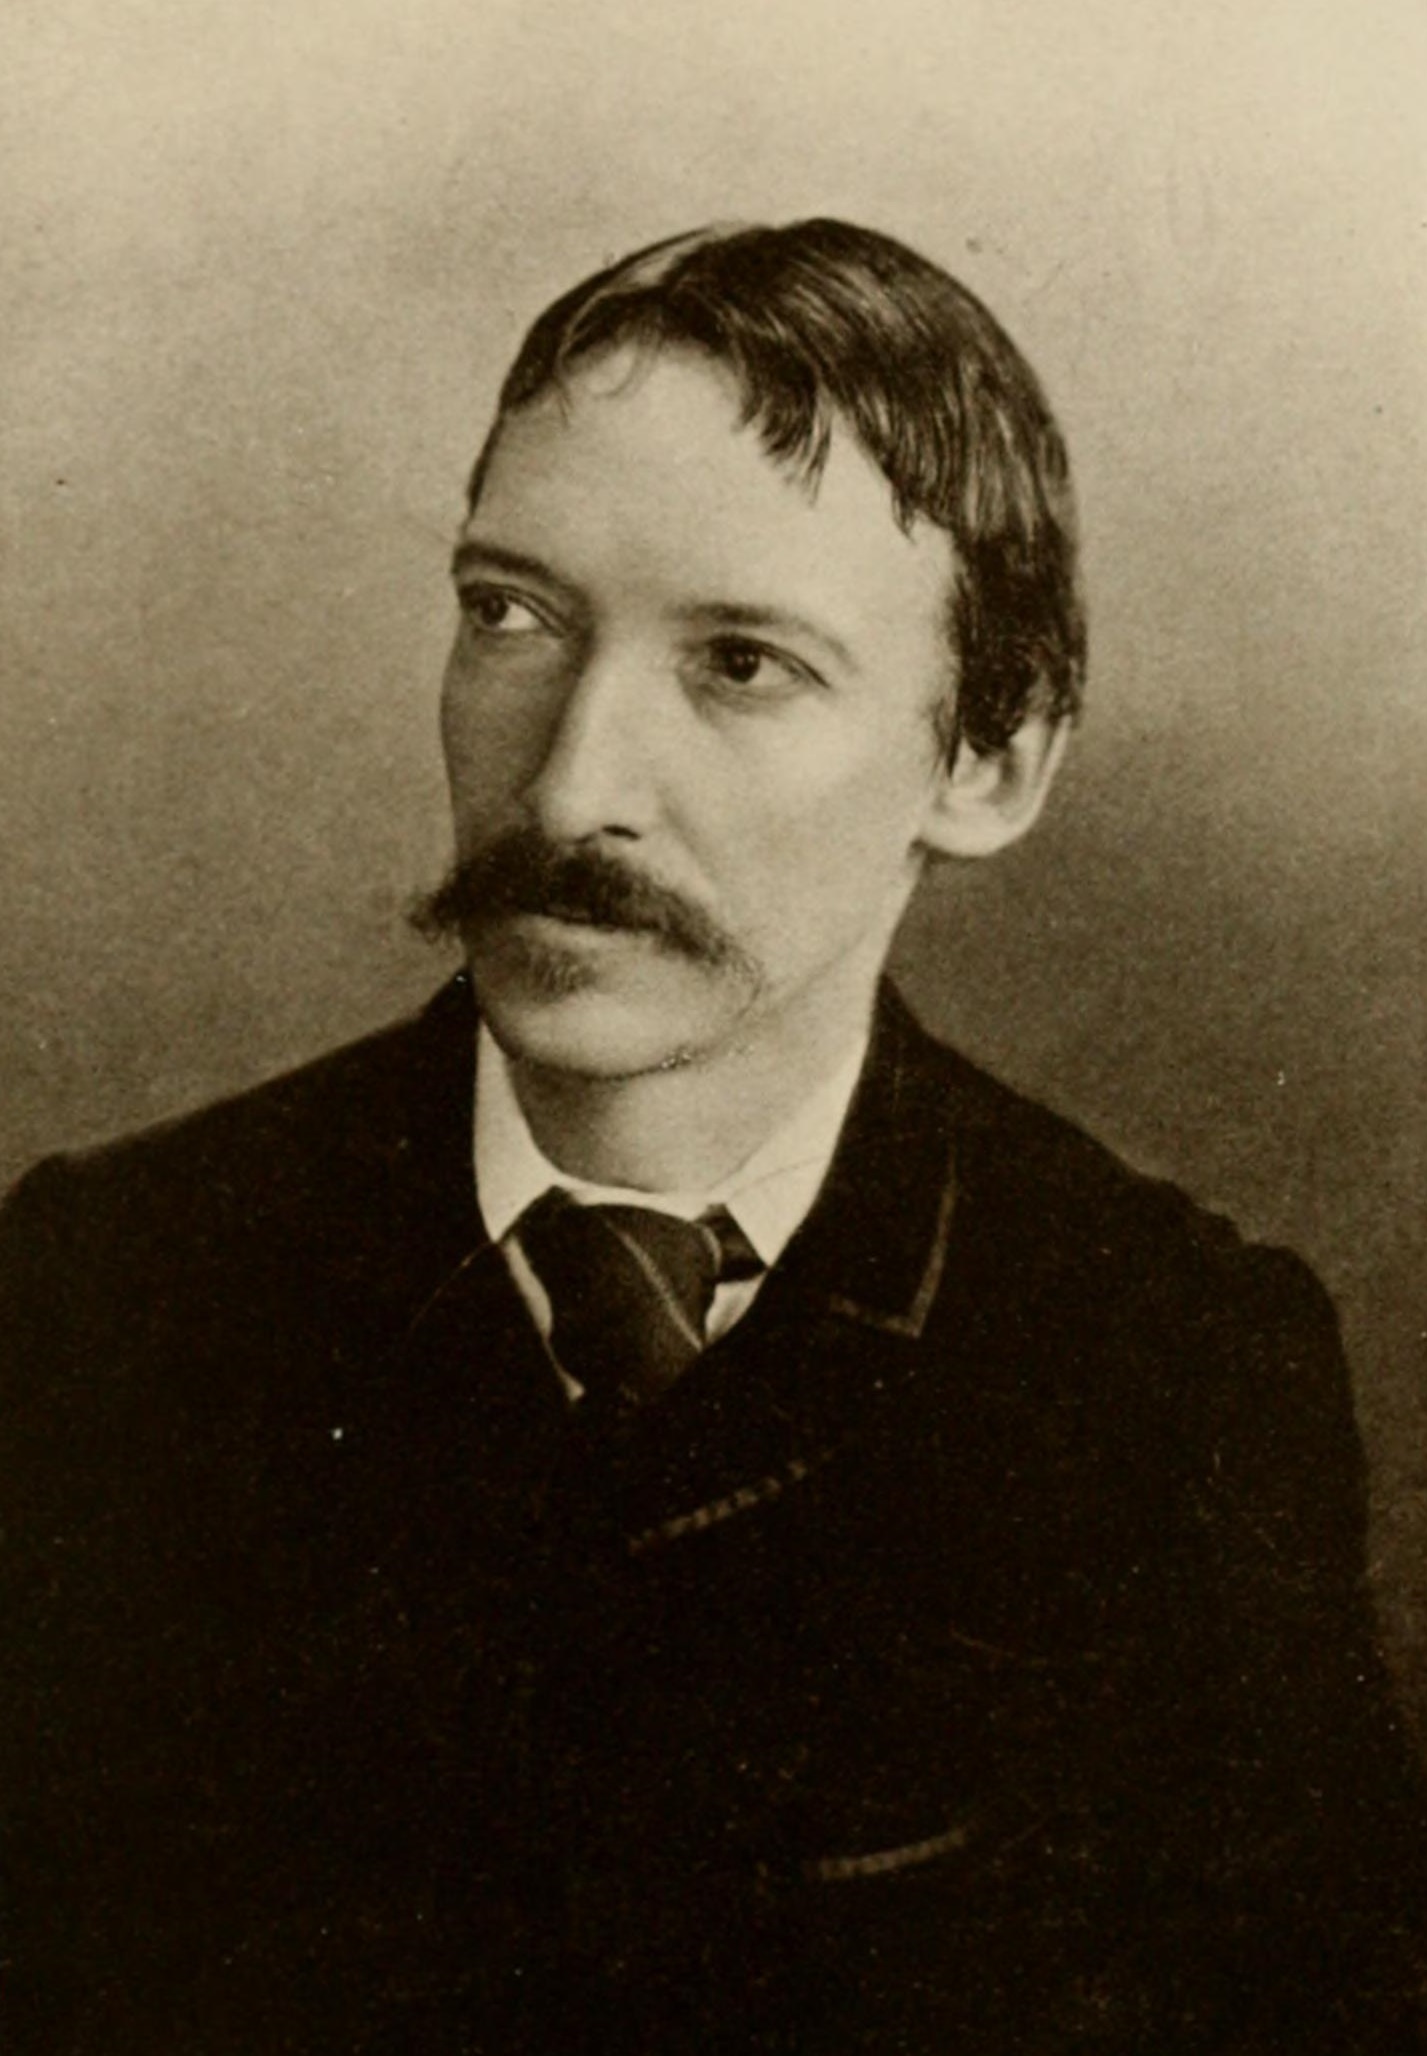 File:Portrait of Robert Louis 0 - Wikimedia Commons